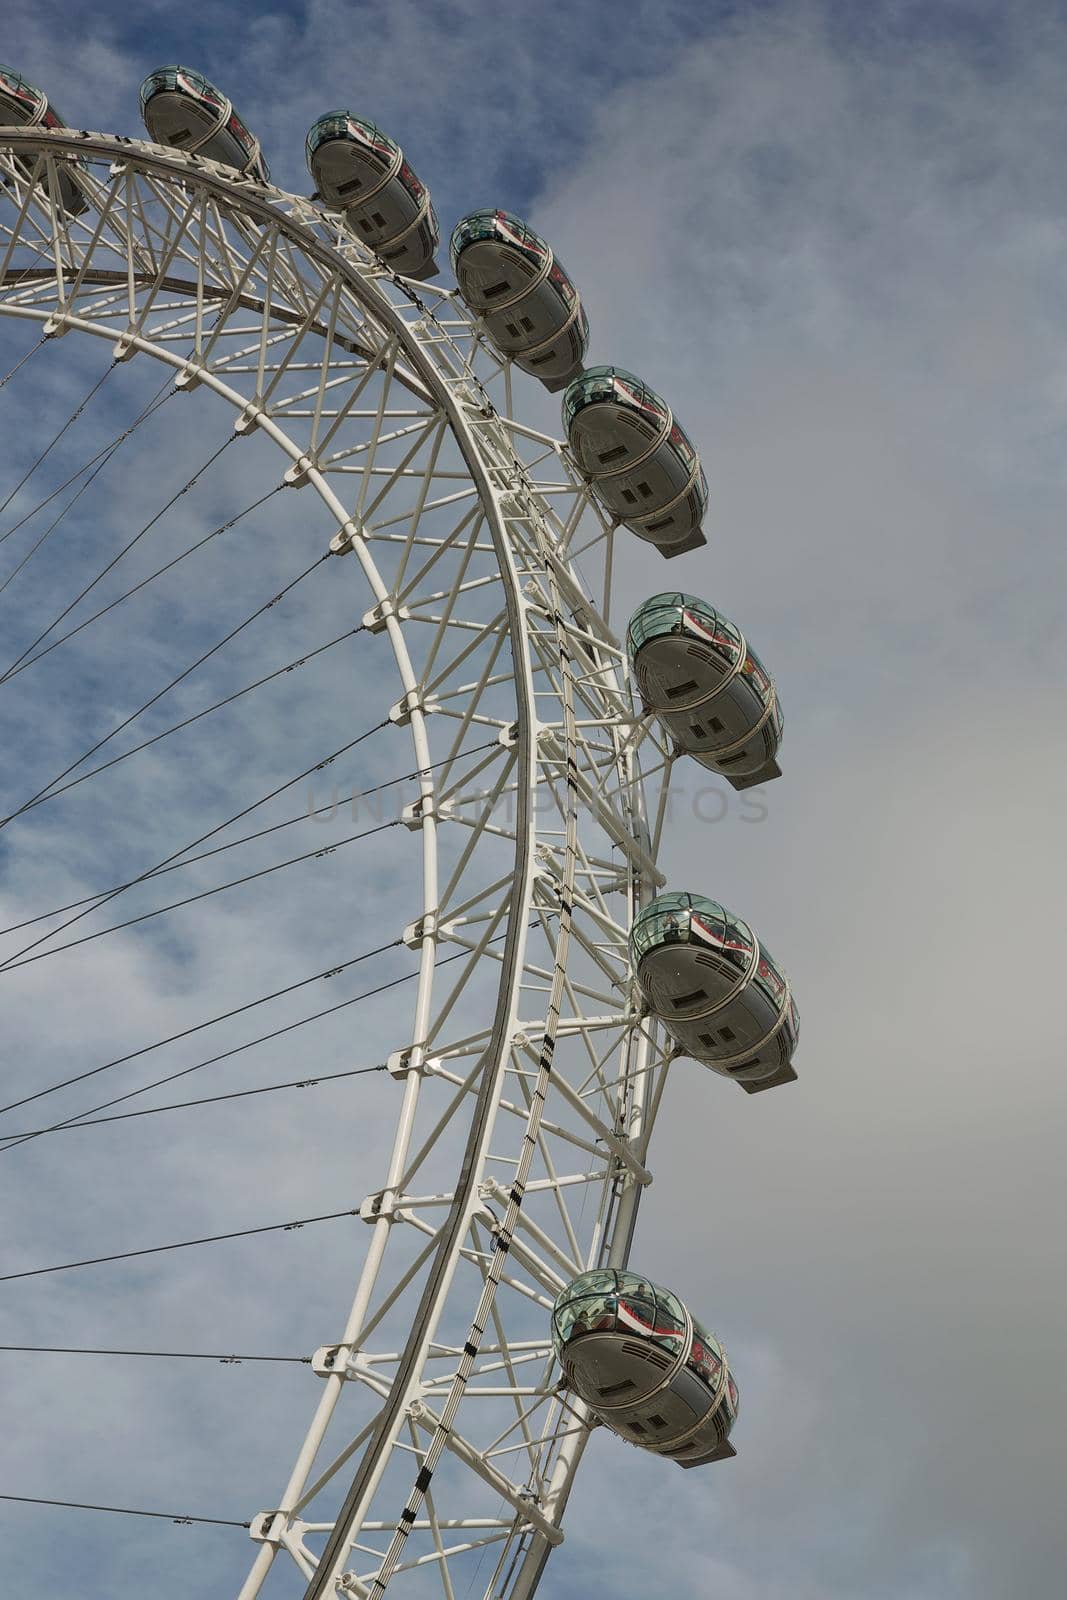 LONDON, UK - SEPTEMBER 08, 2017: The view of the London Eye ferris wheel on the South Bank of River Thames aka Millennium Wheel.